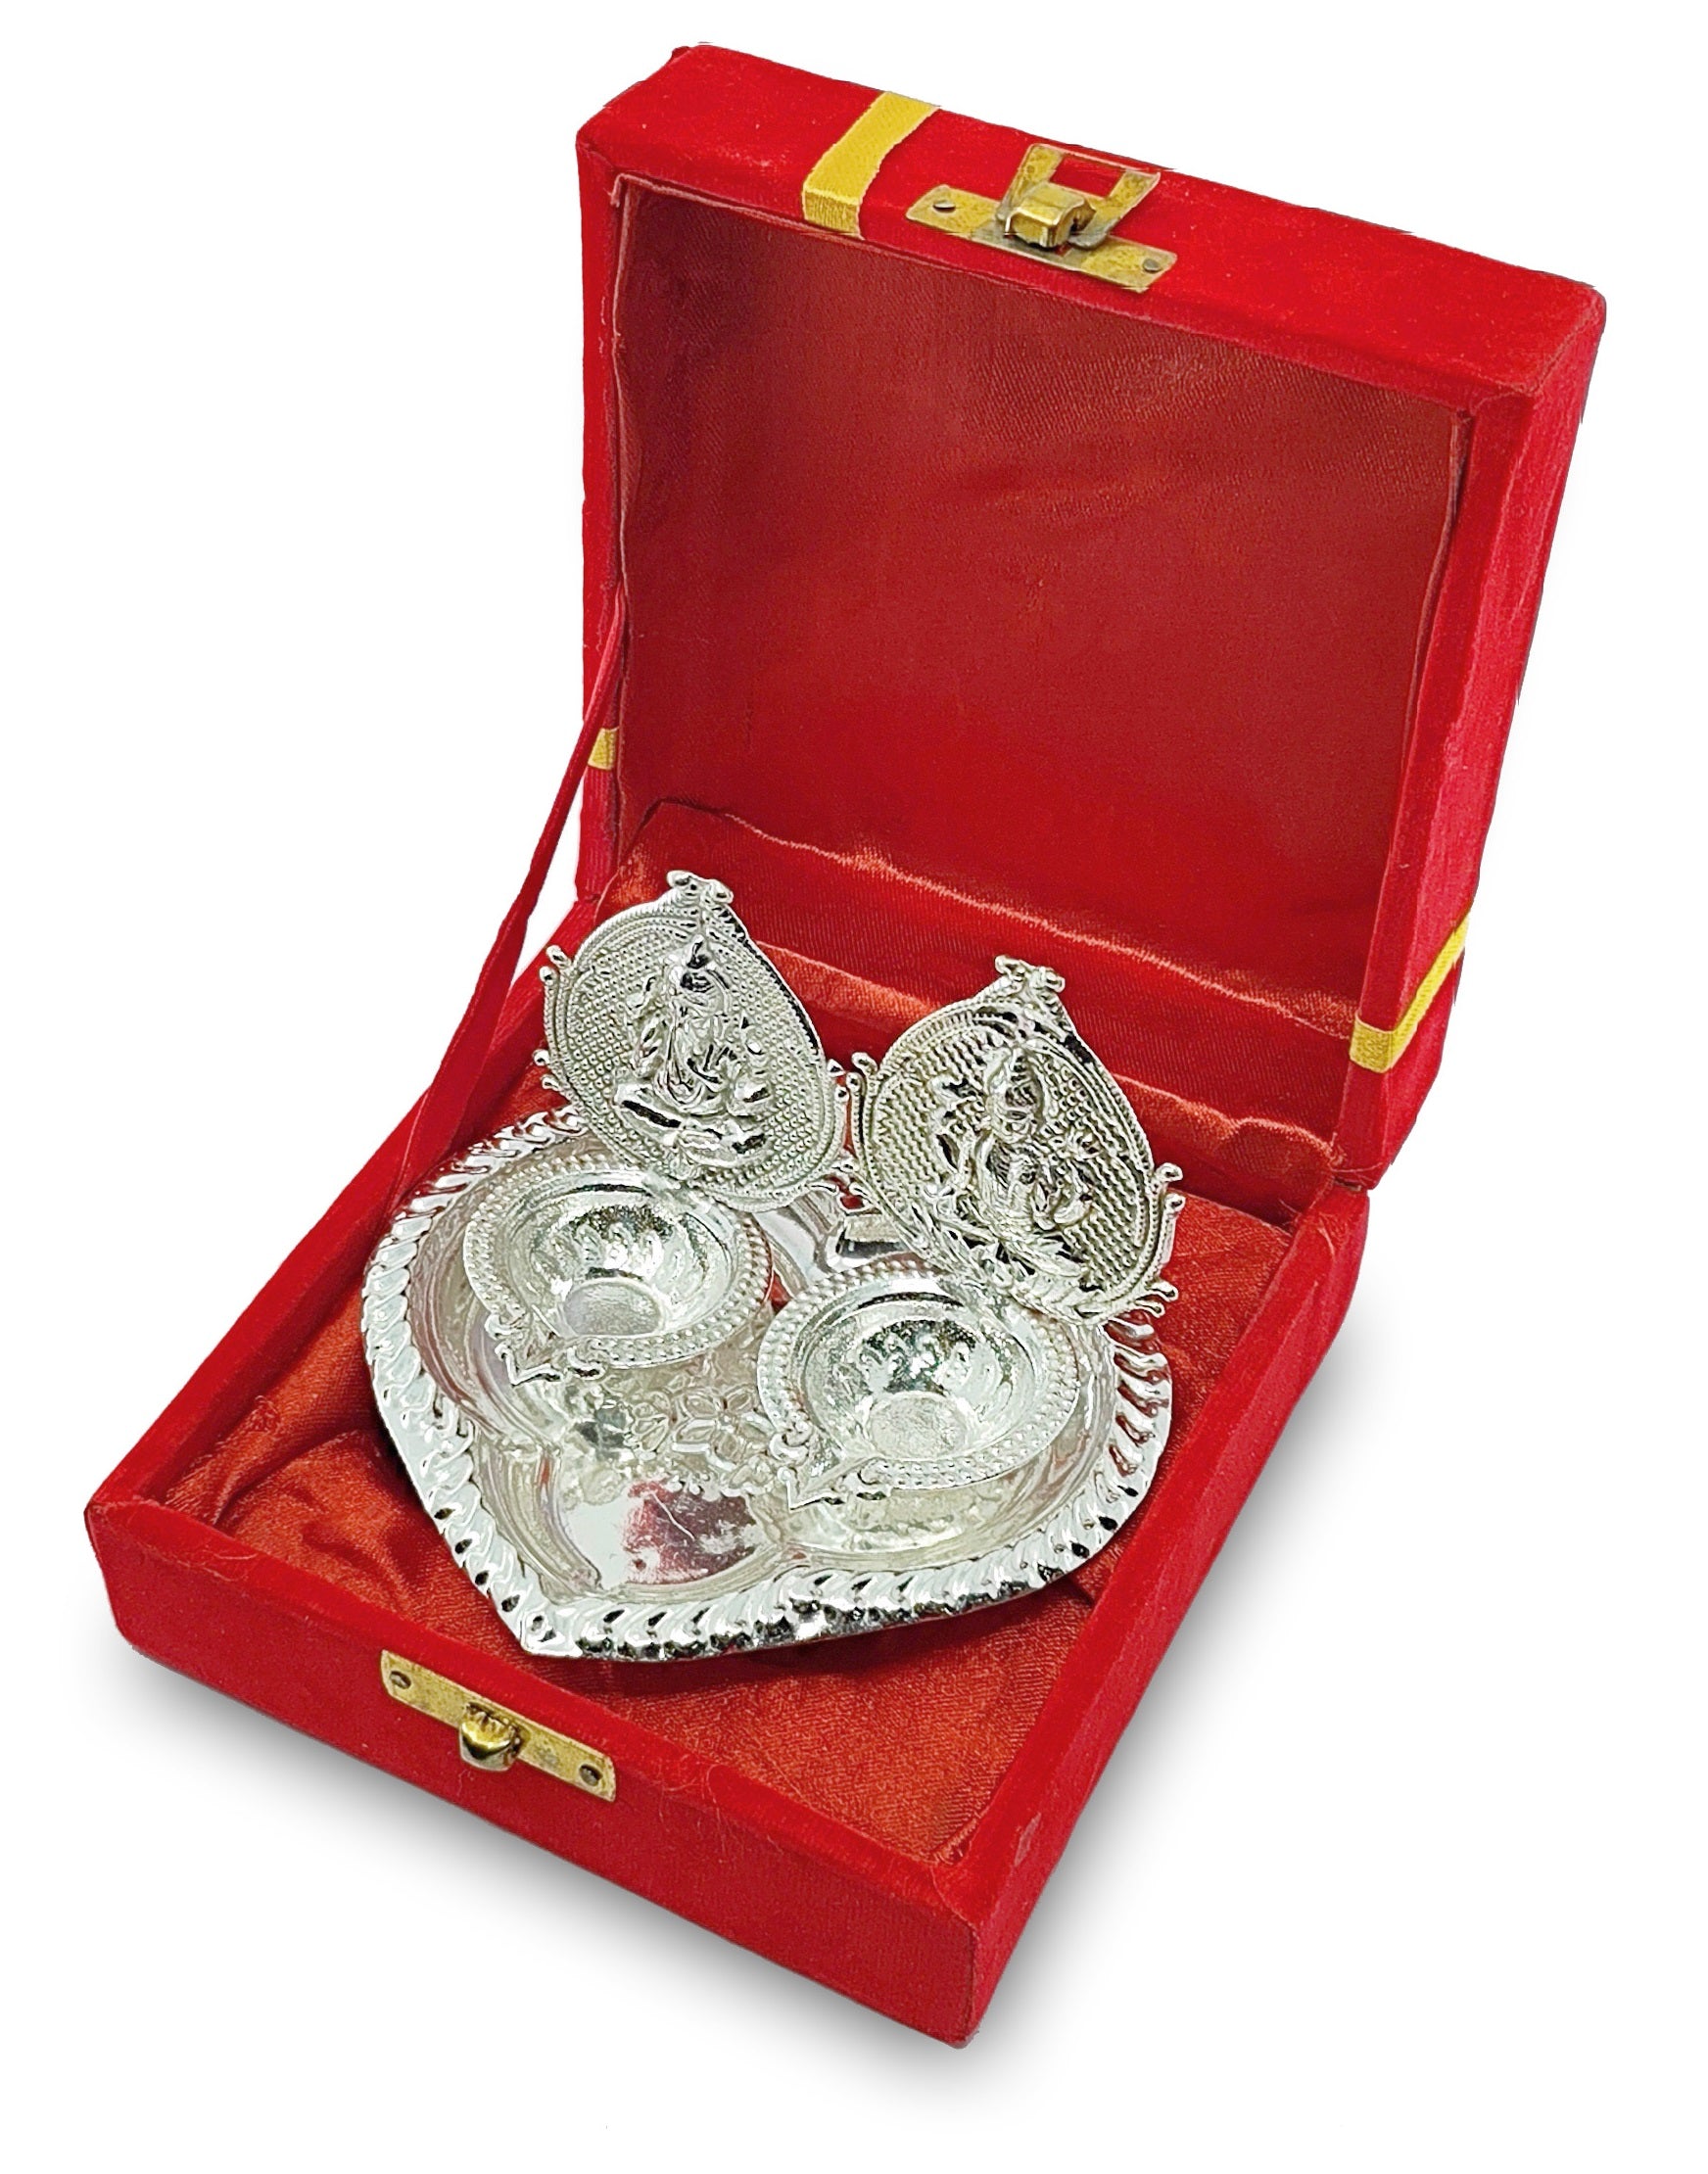 BENGALEN Silver Plated Lakshmi Ganesha Diya with Red Velvet Gift Box Dia Pooja Items Diwali Decoration Puja Gifts Handmade Gift Items